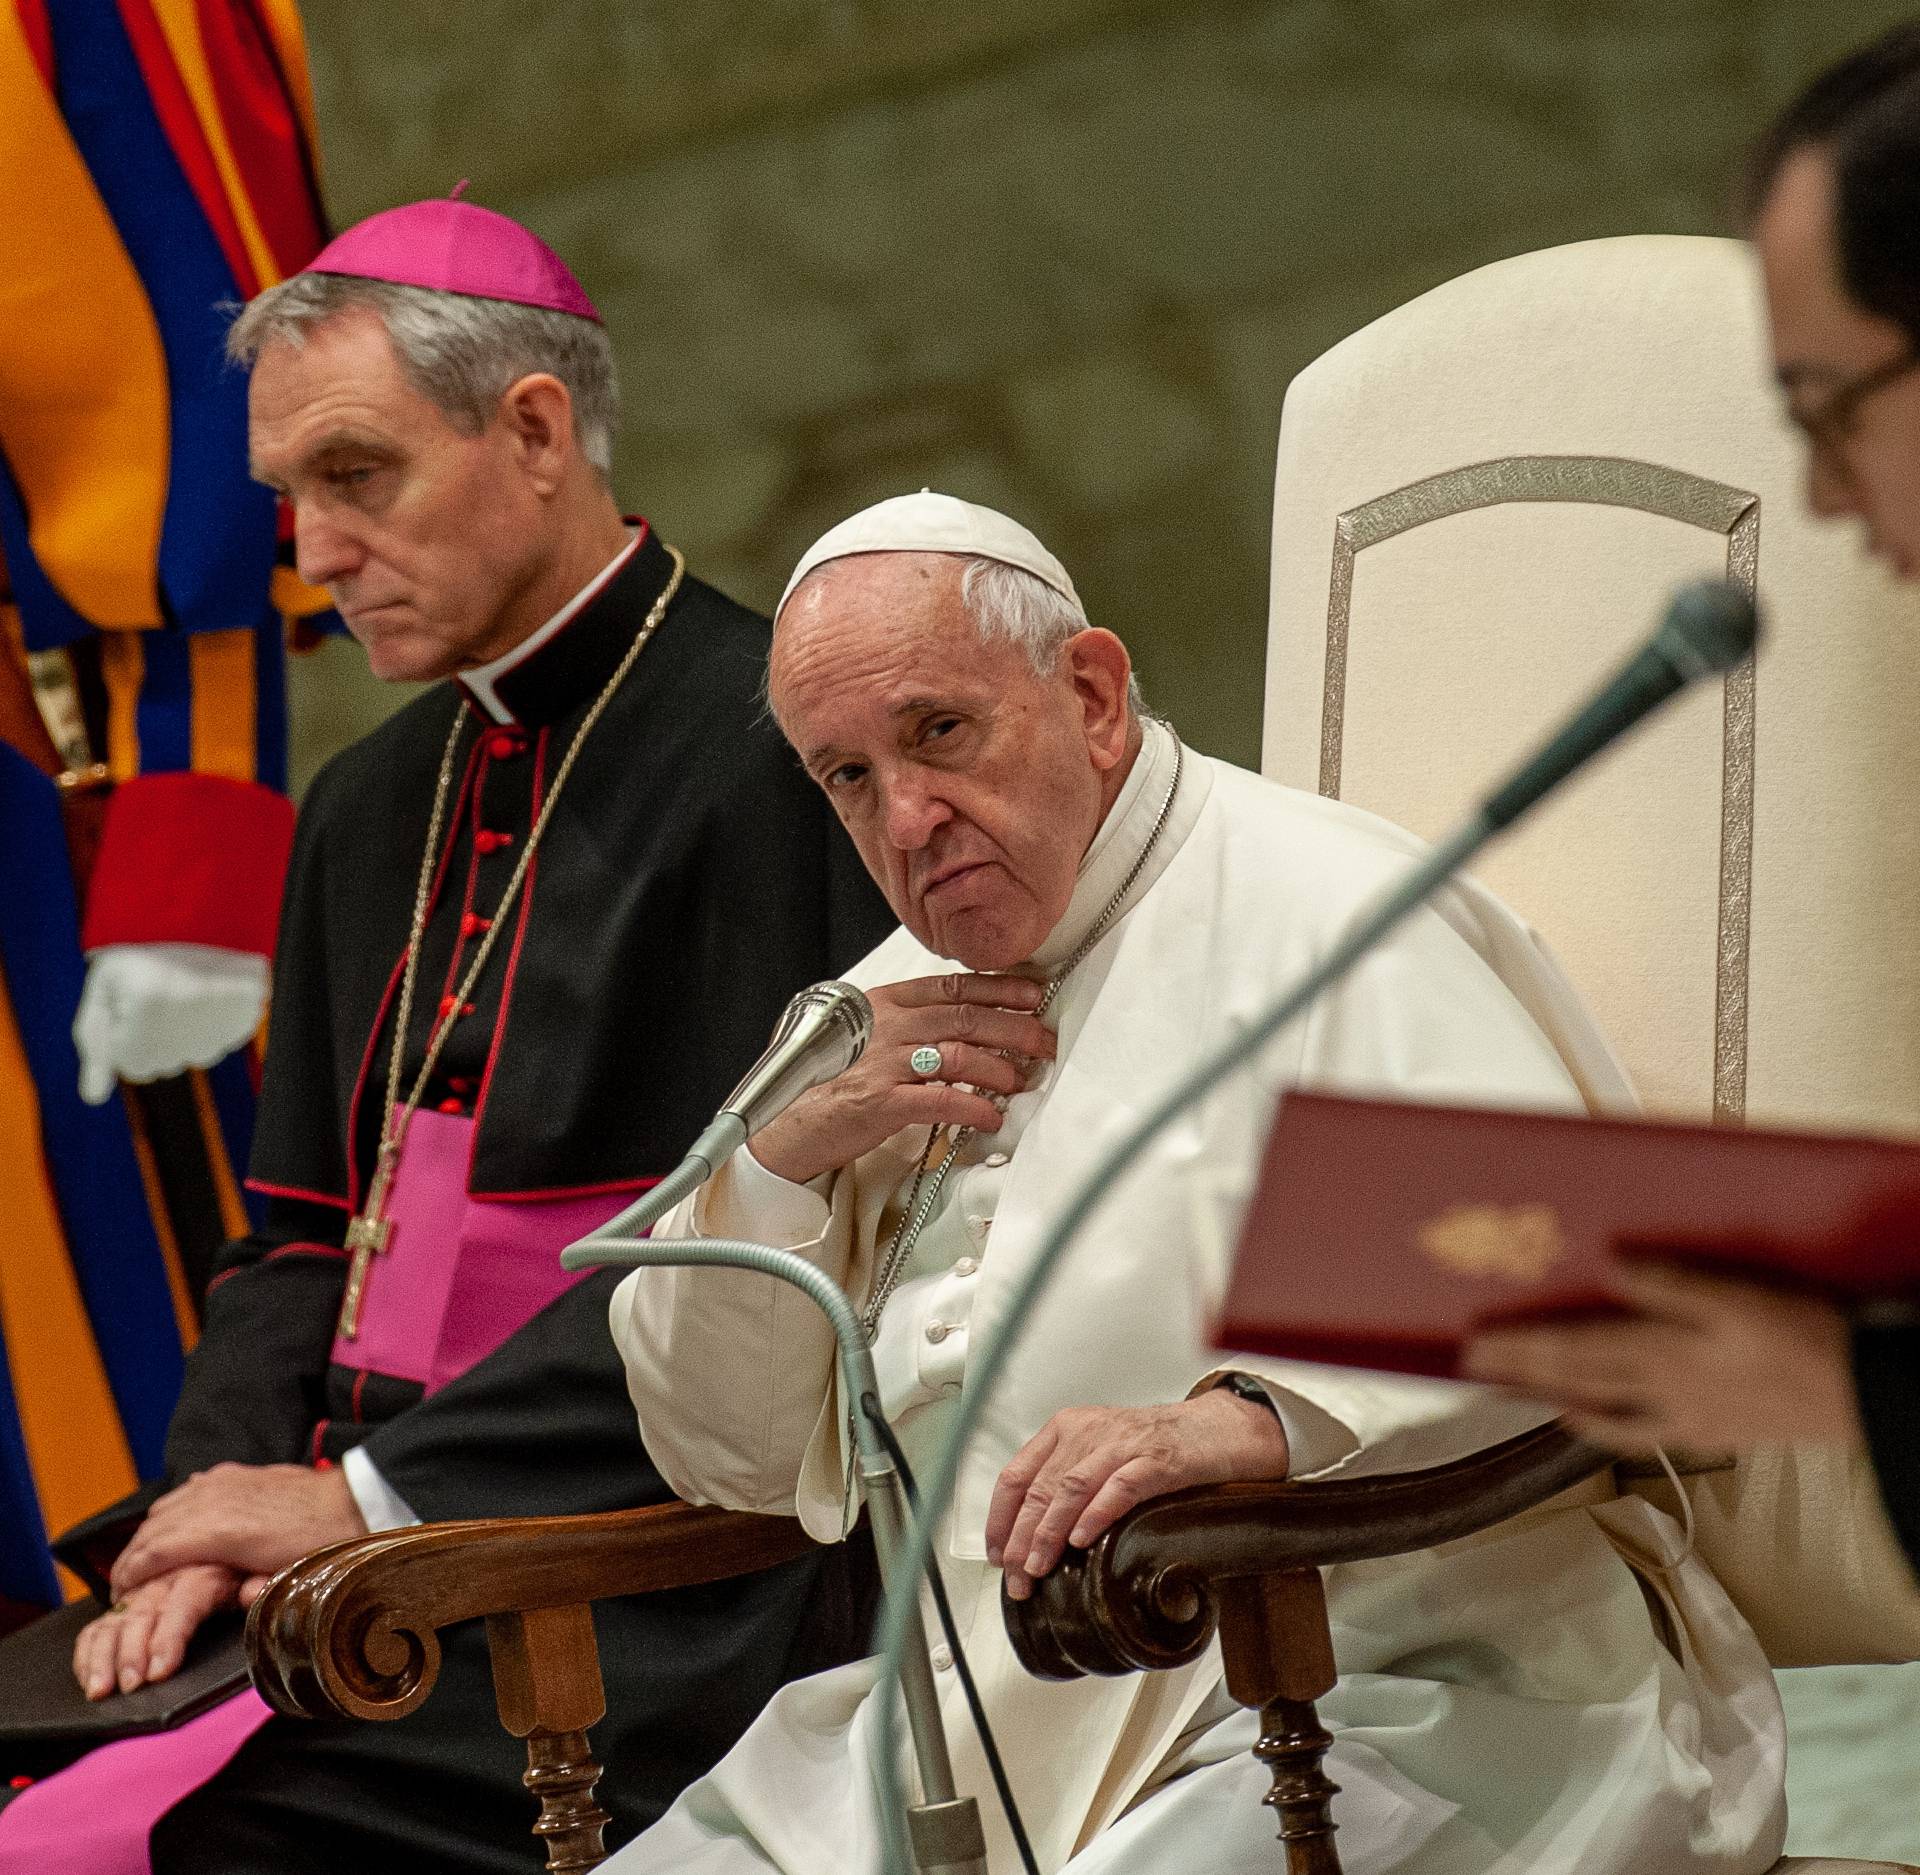 December 11, 2019 : Weekly general audience in Paul VI Hall, at the Vatican.